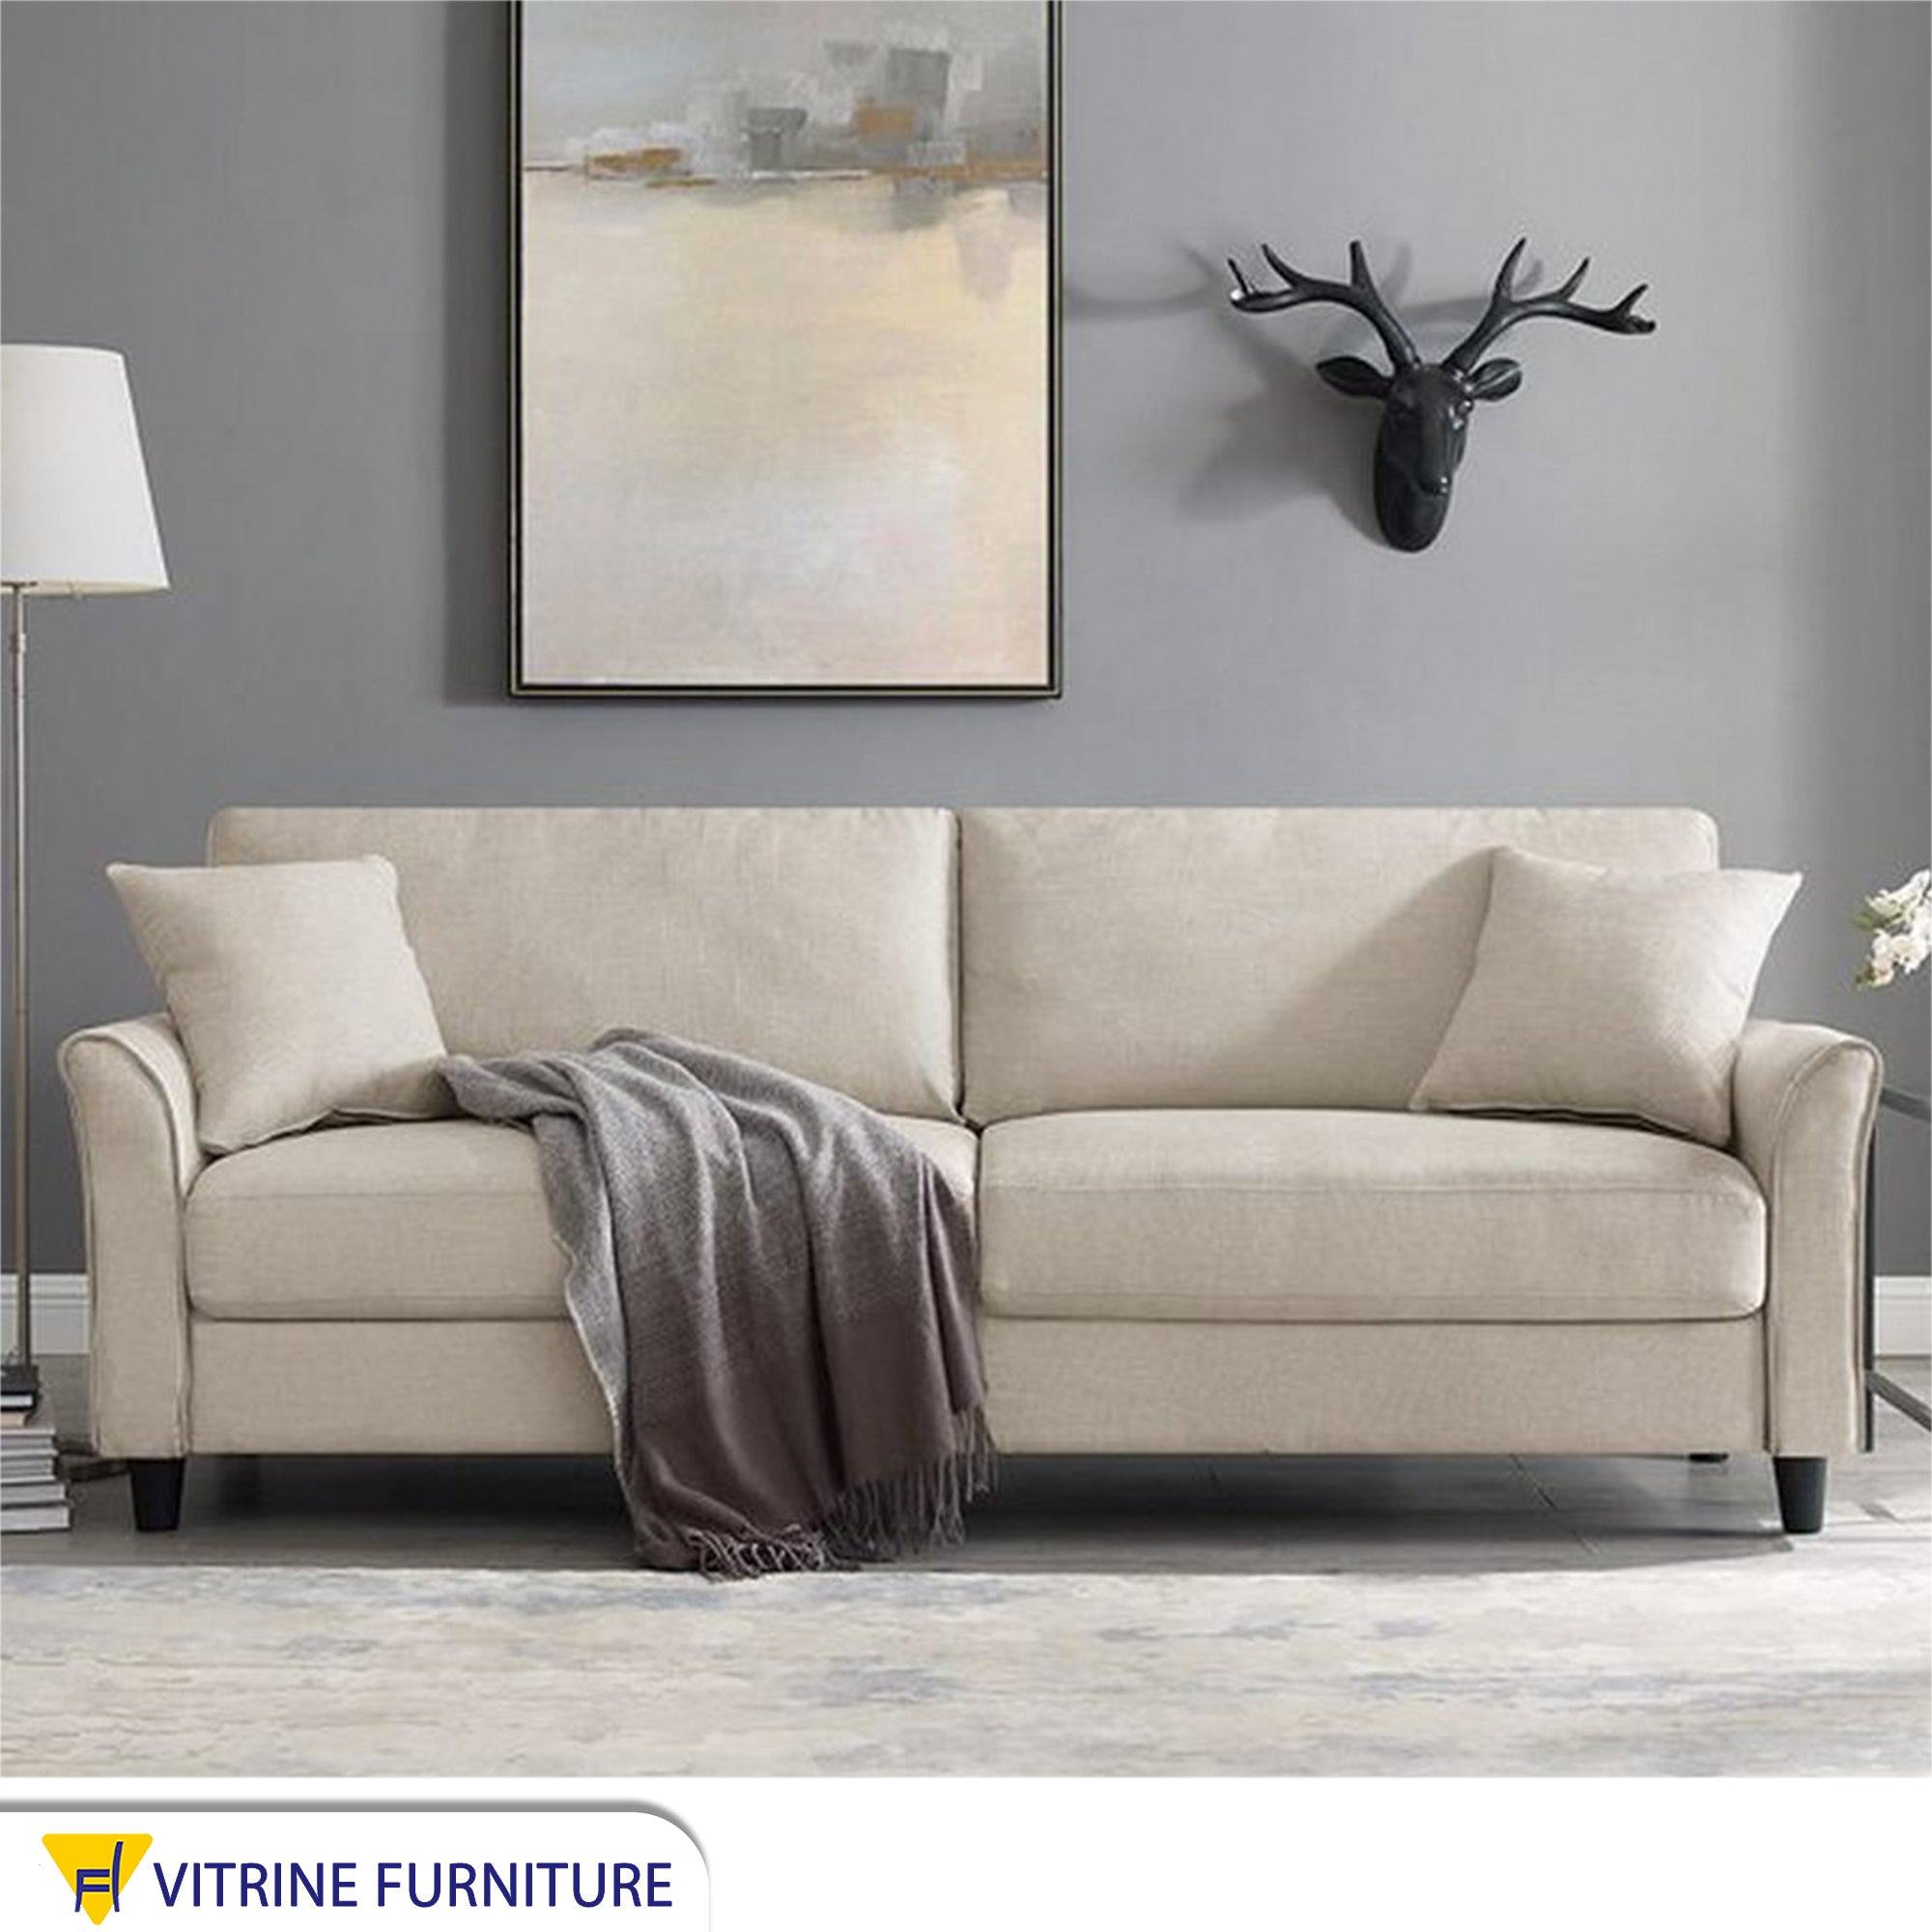 Double sofa in beige color